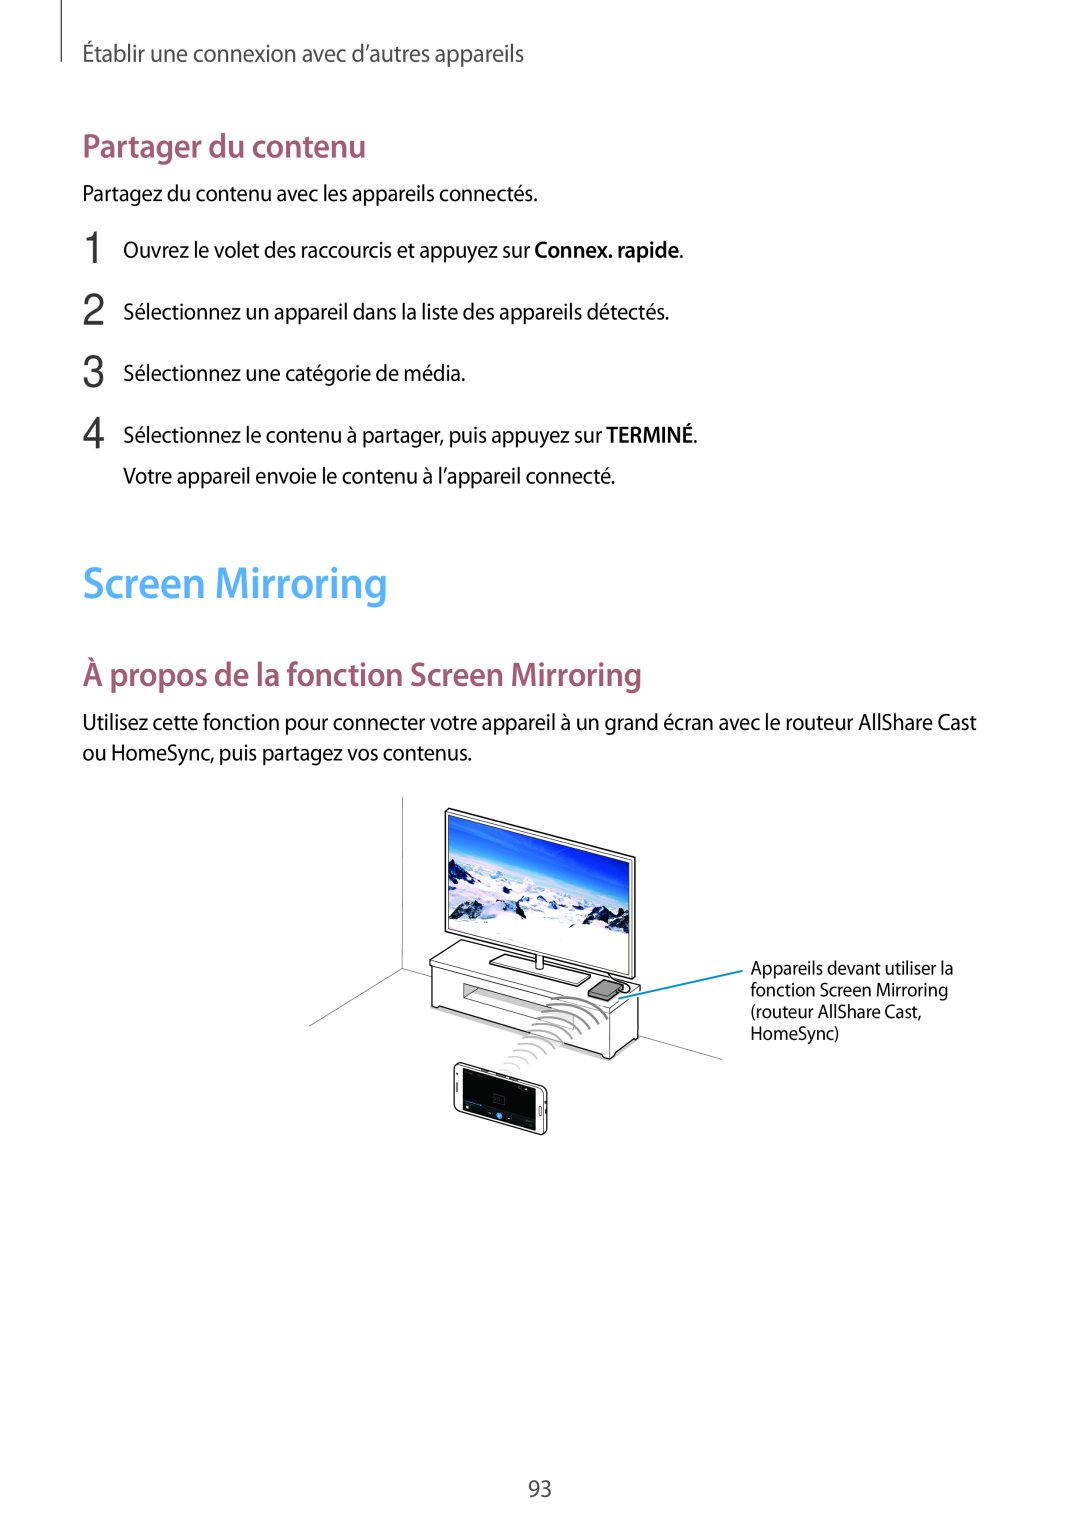 Samsung SM-A300FZWUSFR, SM-A300FZSUXEF, SM-A300FZKUBOG Partager du contenu, À propos de la fonction Screen Mirroring 